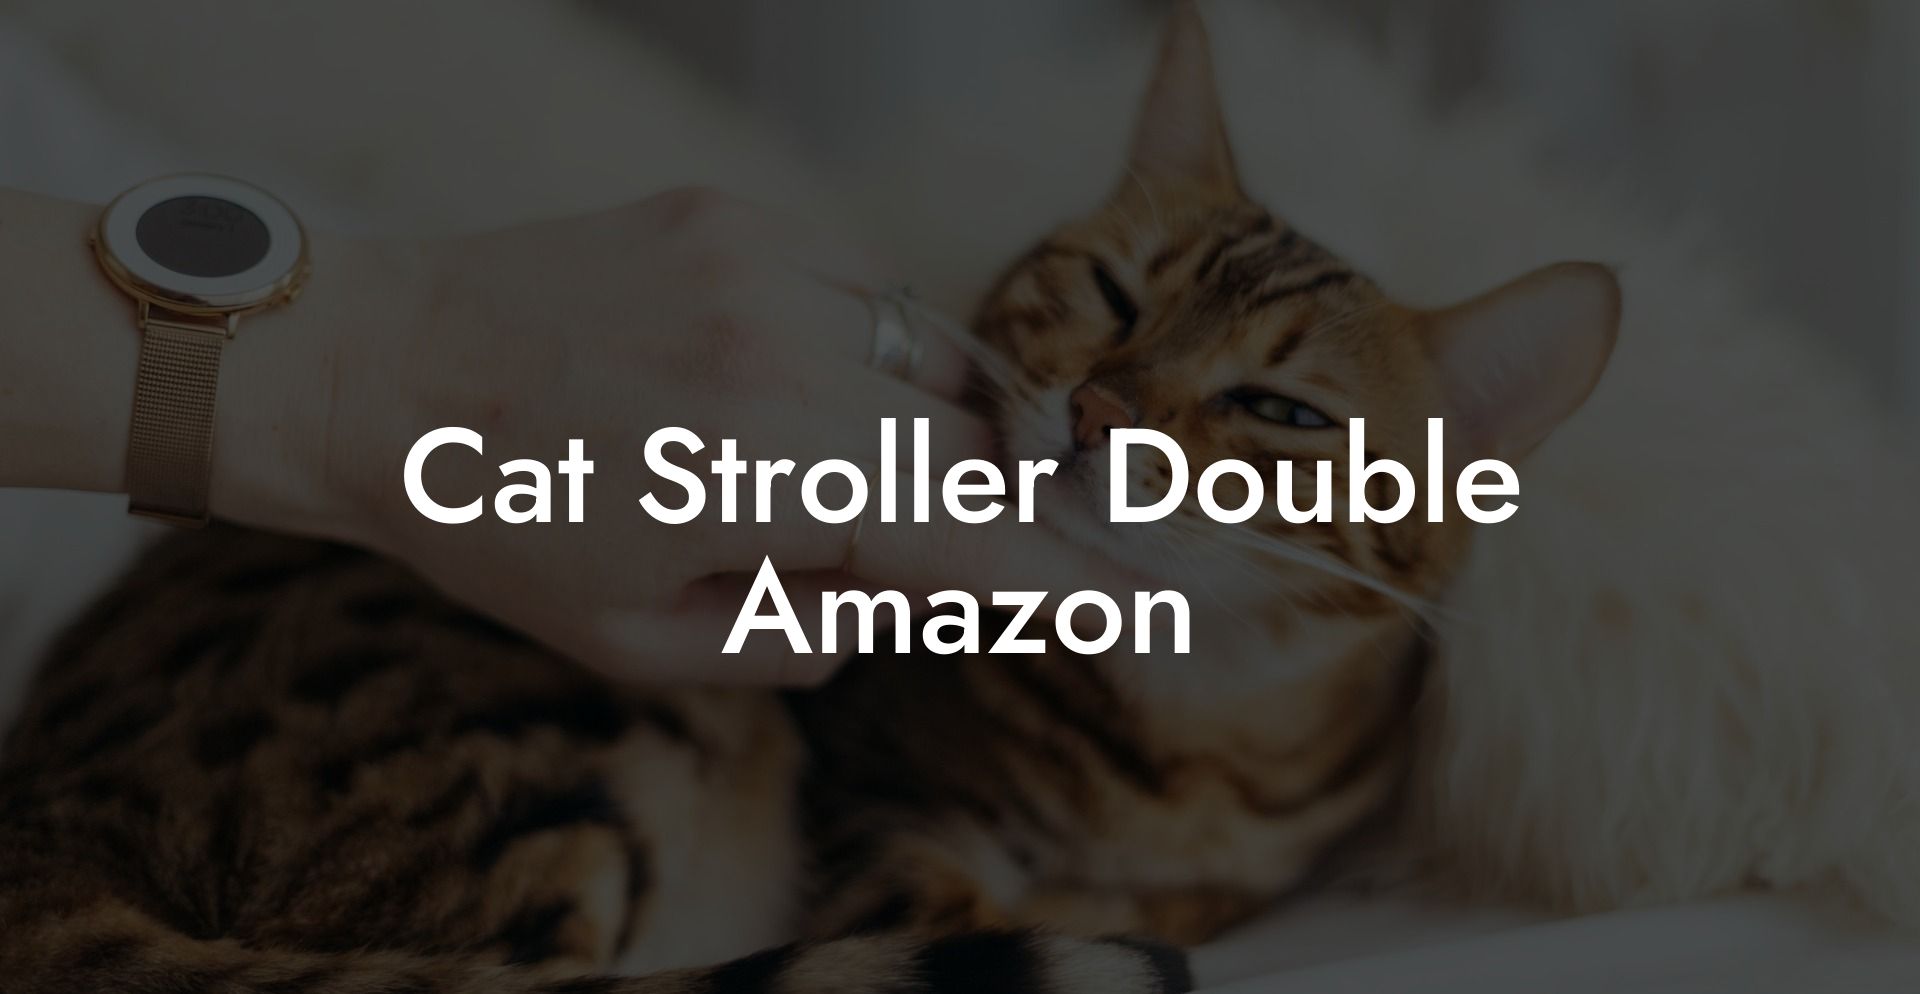 Cat Stroller Double Amazon